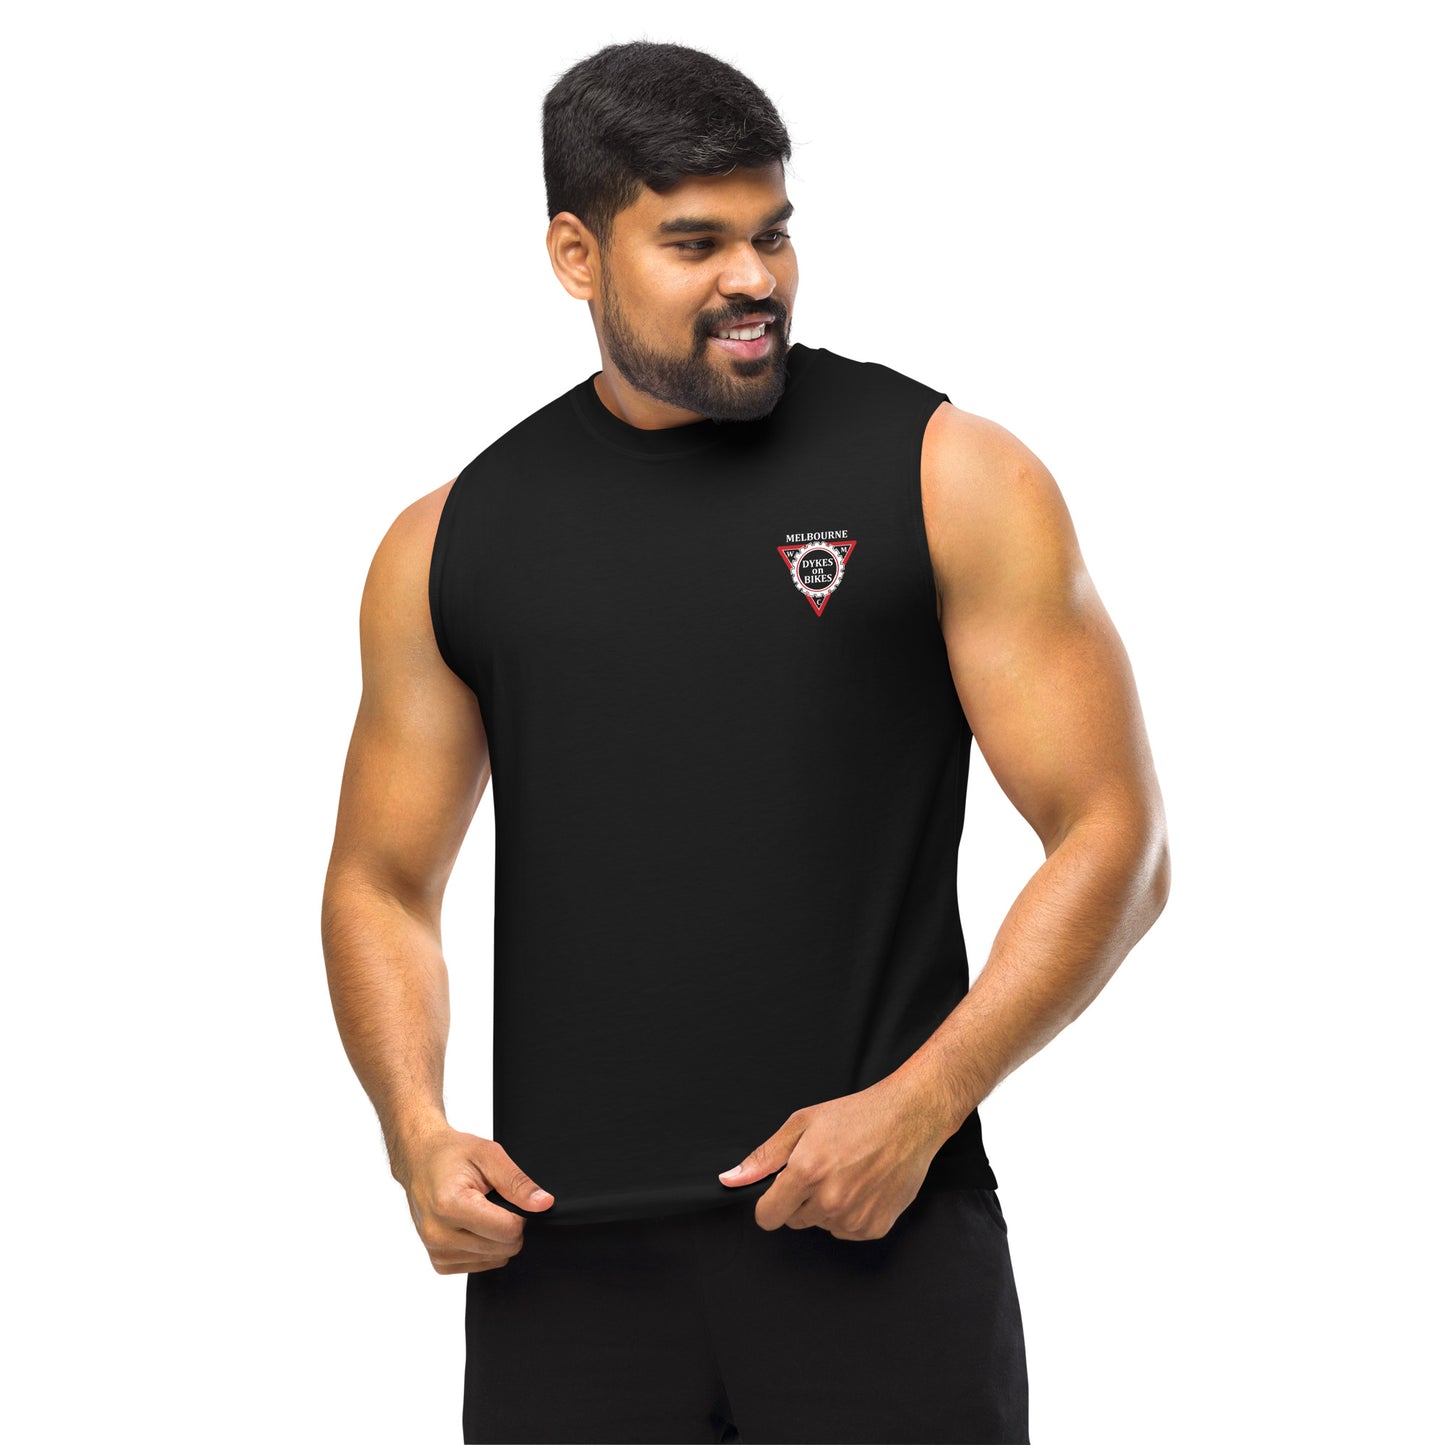 Unisex Muscle Shirt - Black